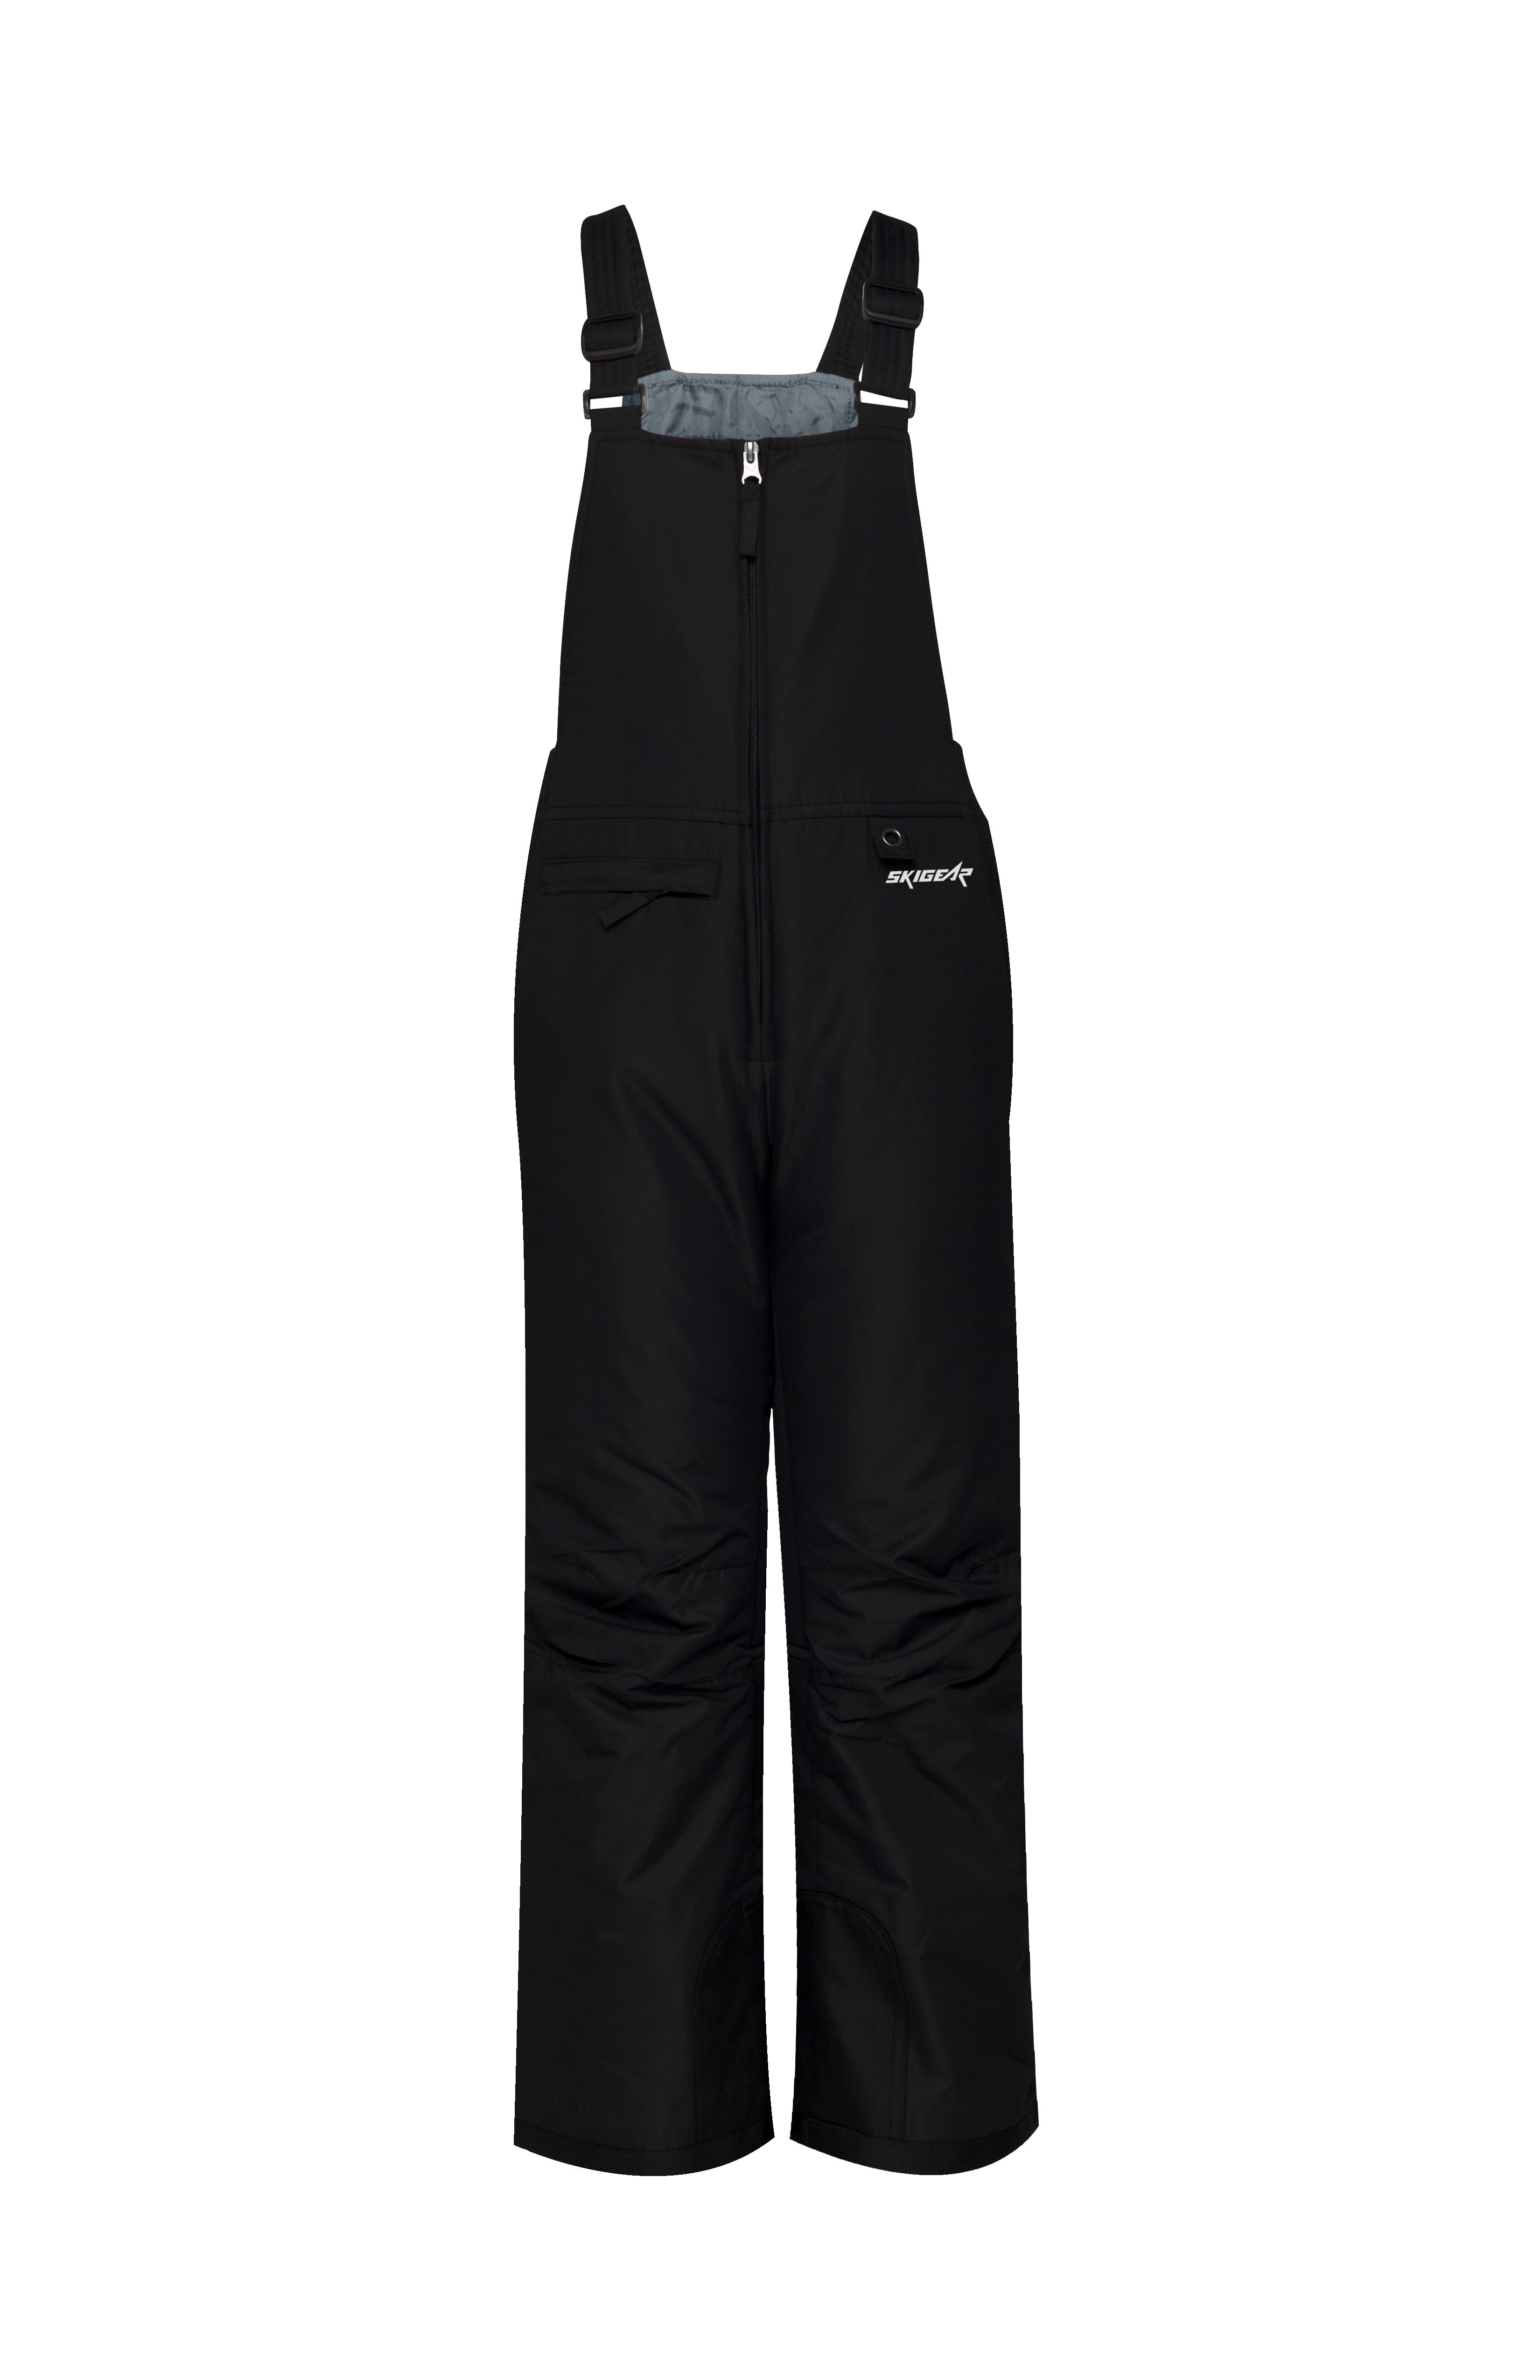 NEW ZeroXposur Youth Snowbib Ski Pants Overalls Black Large Size 7 B280 